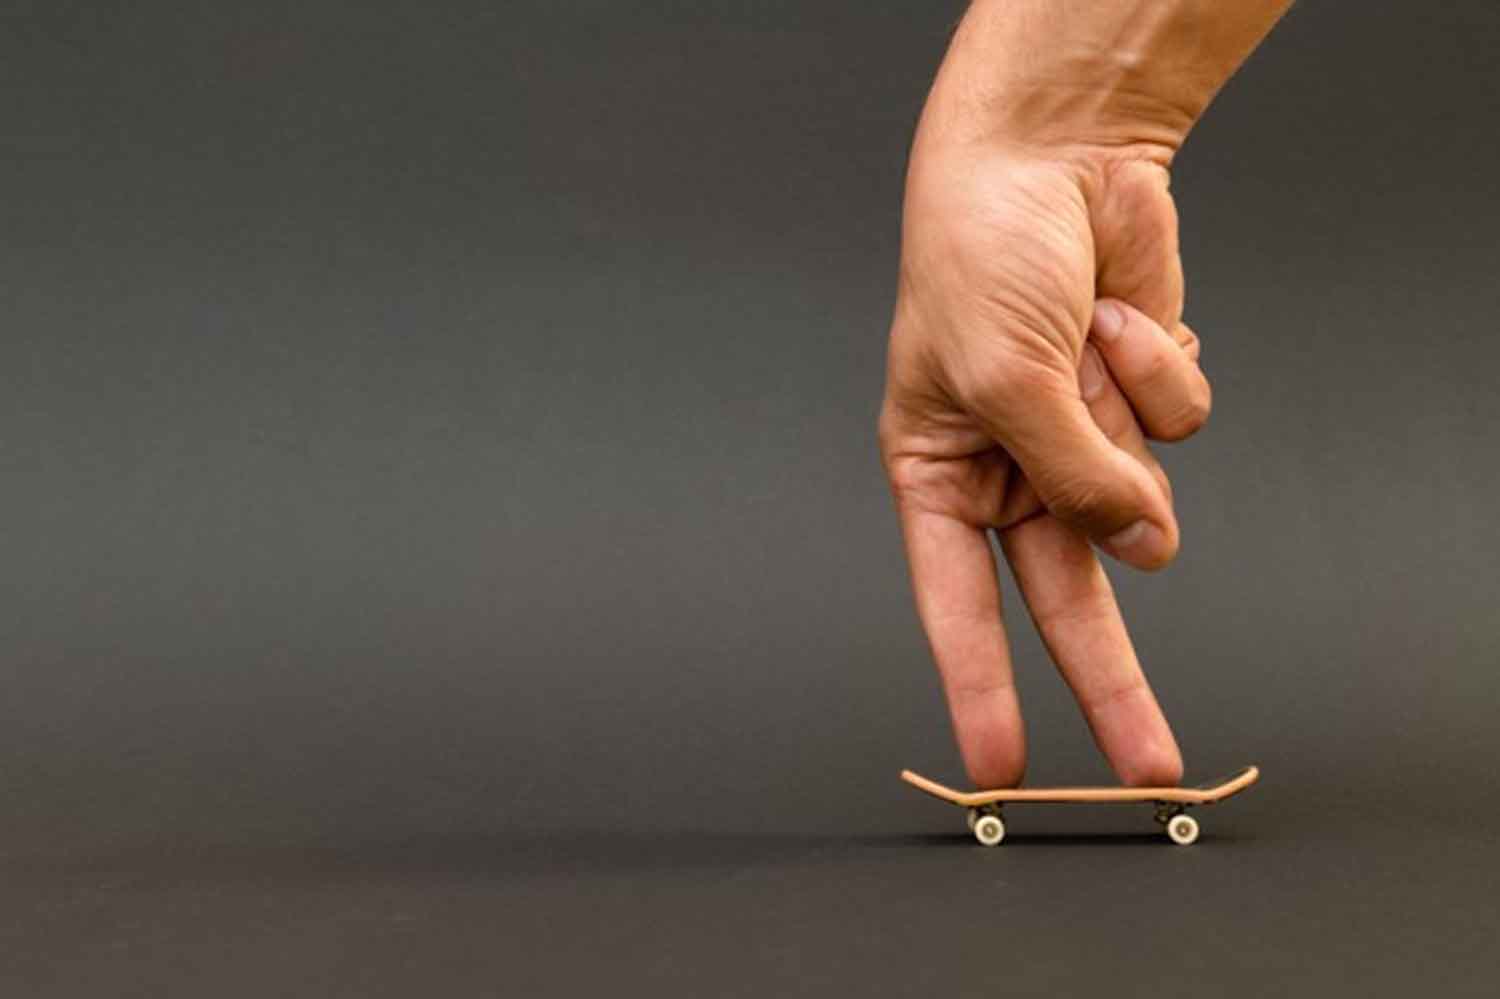 Skate dedo fingerboard profissional